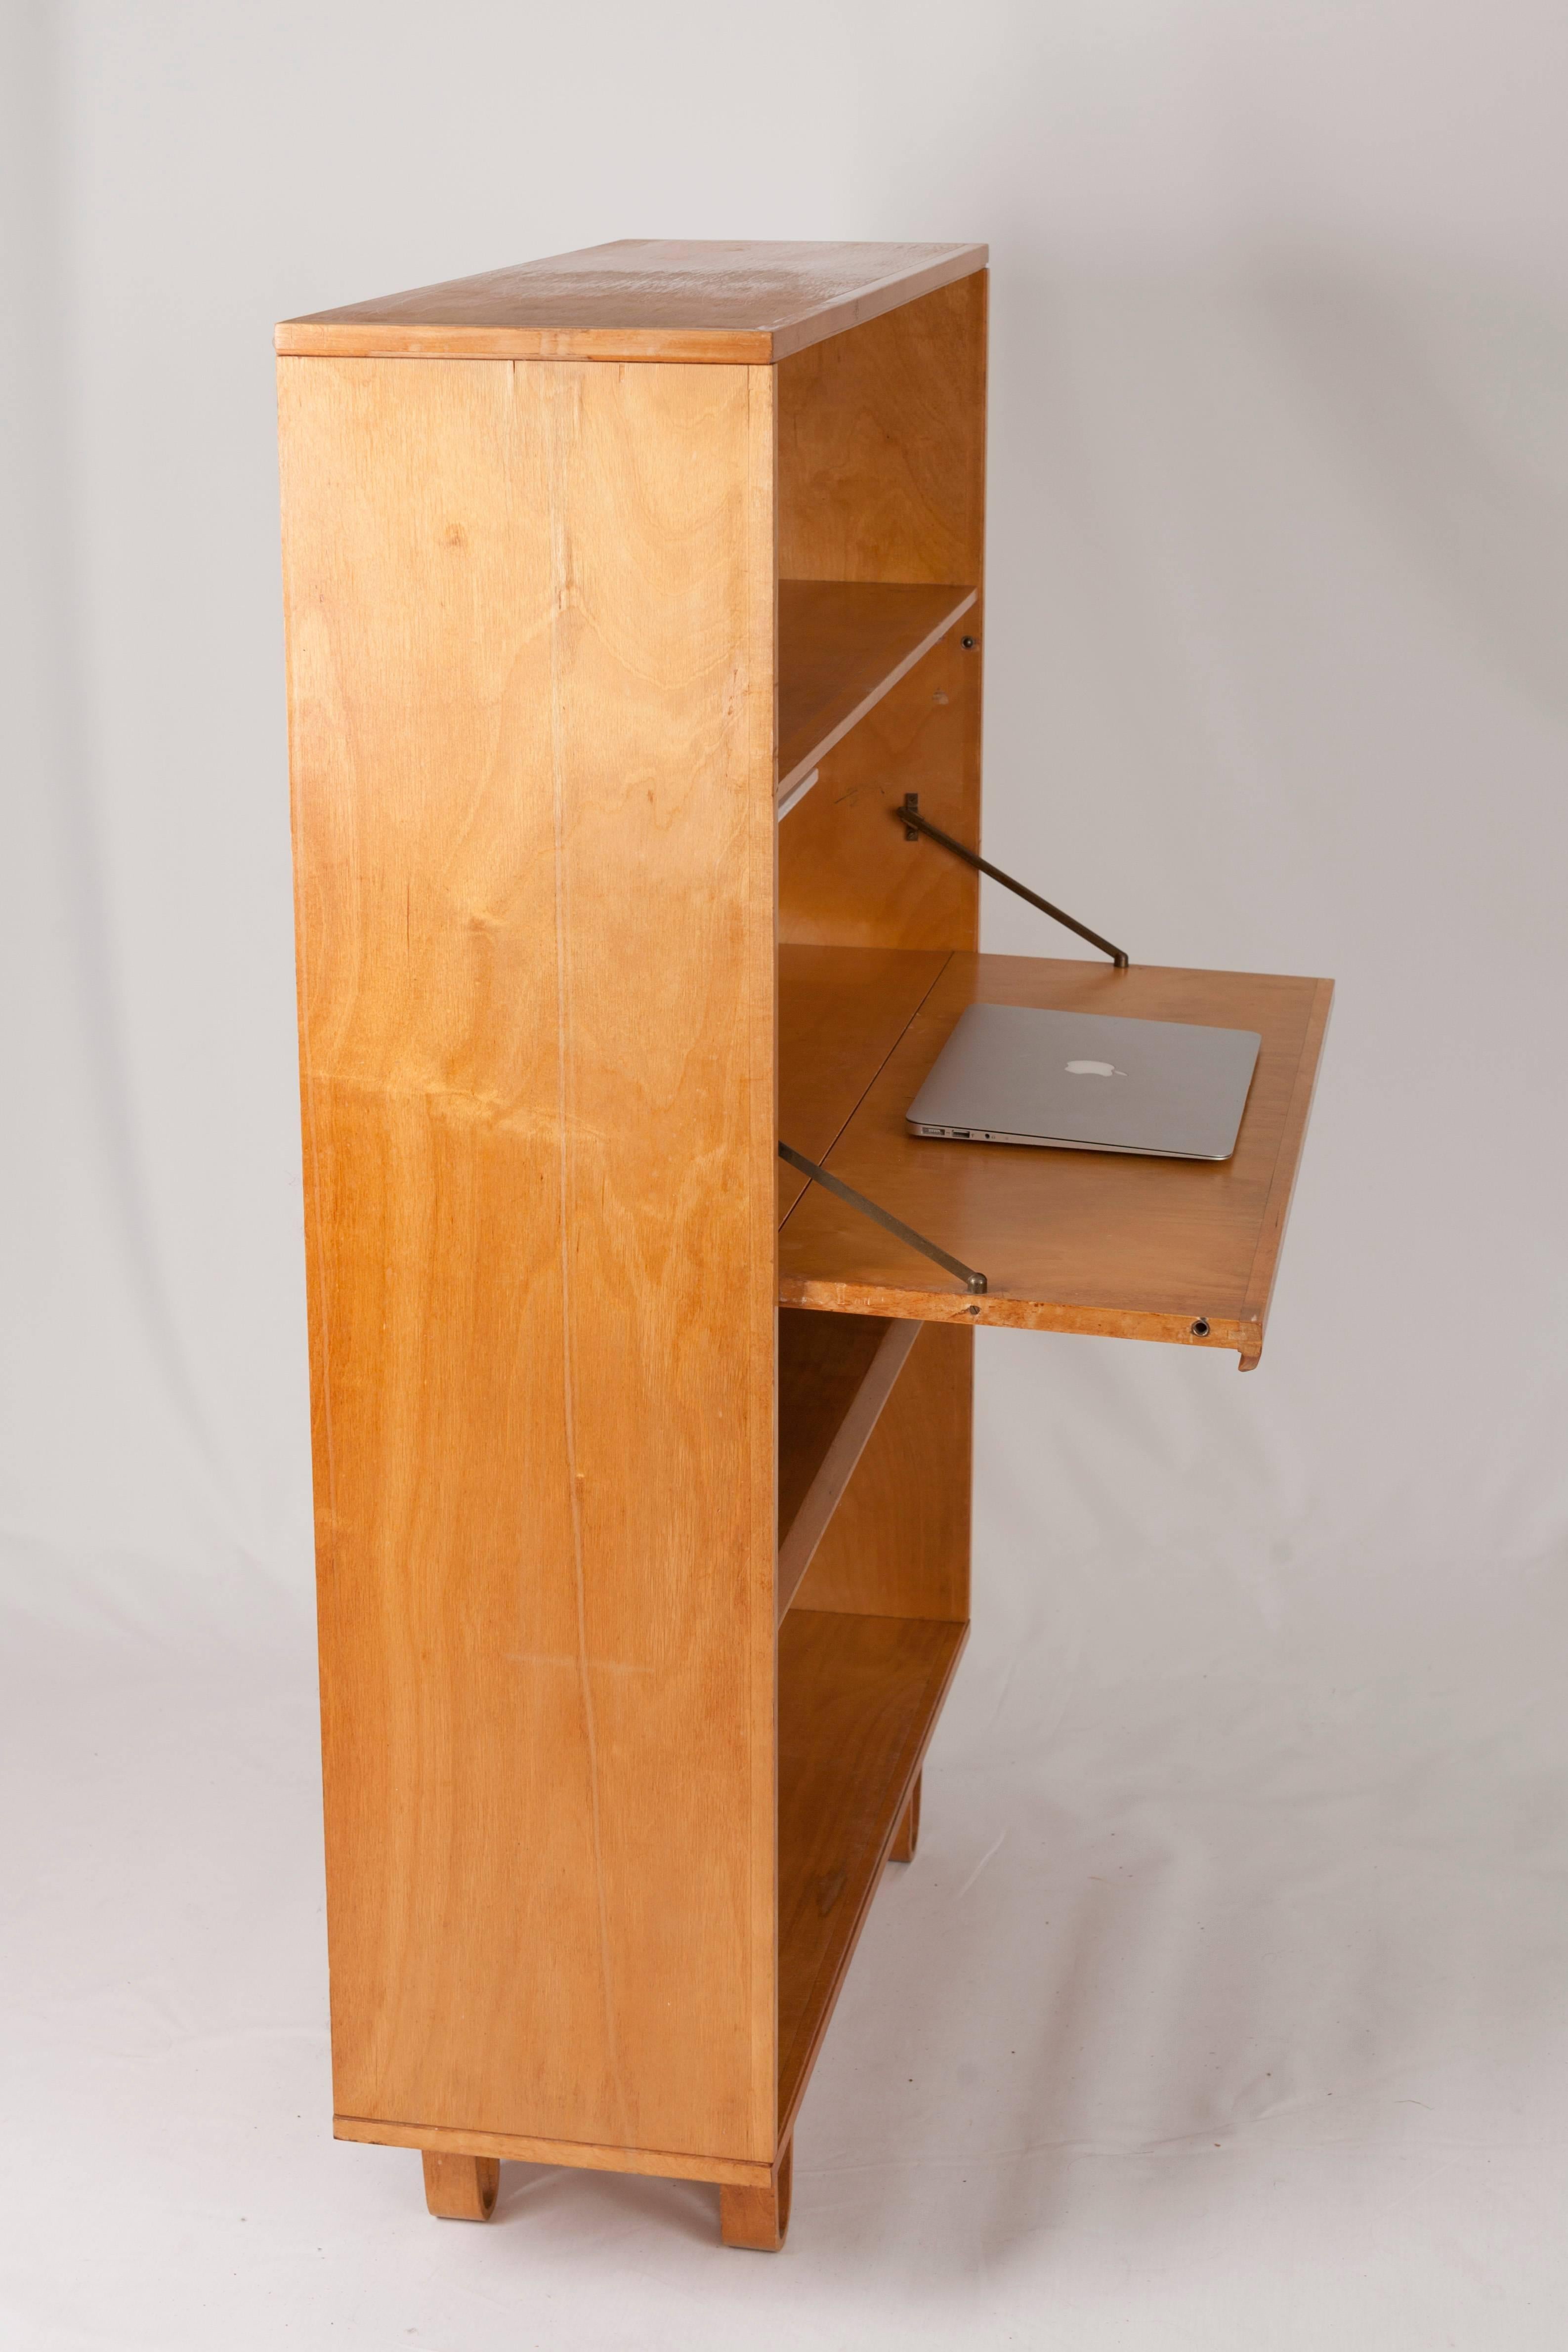 Birch Midcentury Bookcases slash Writing Desks BB02 by Cees Braakman for Pastoe